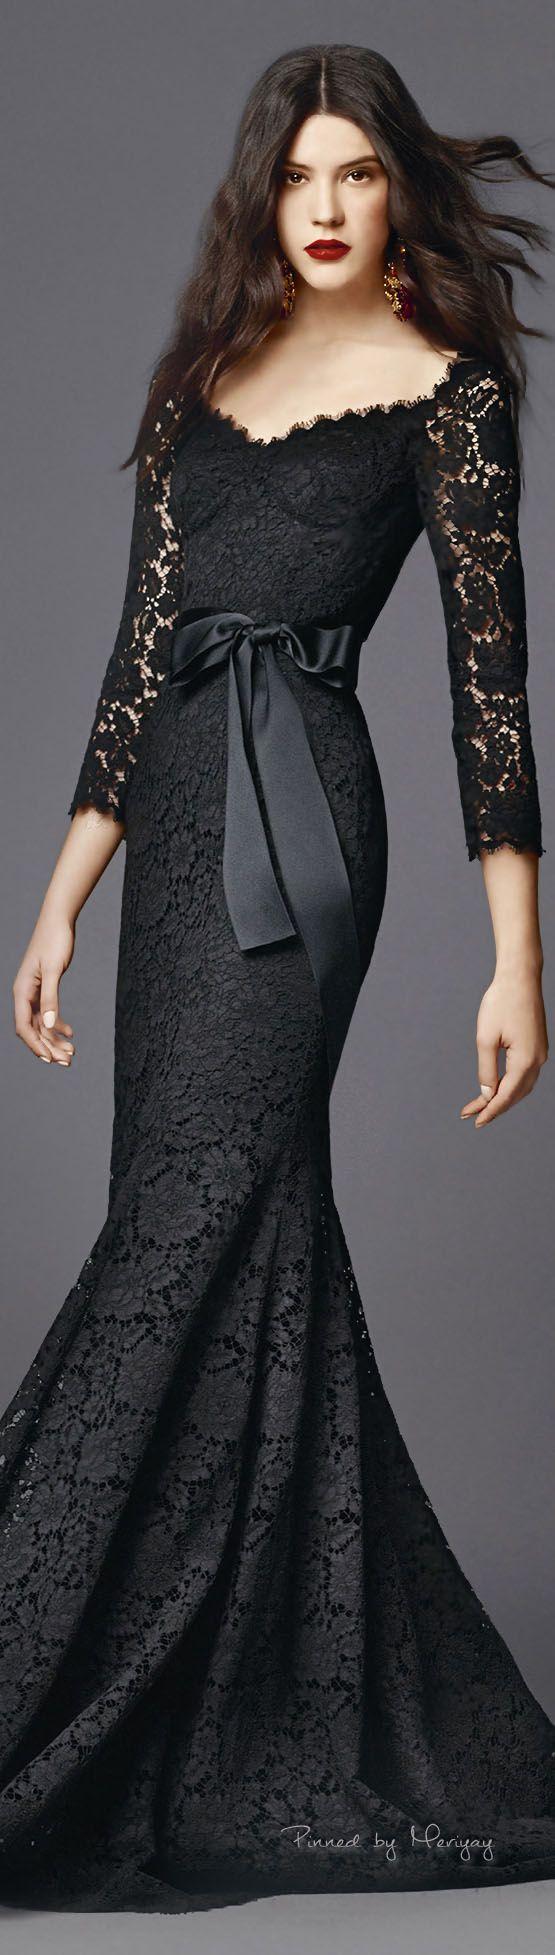 زفاف - Long Black Dress